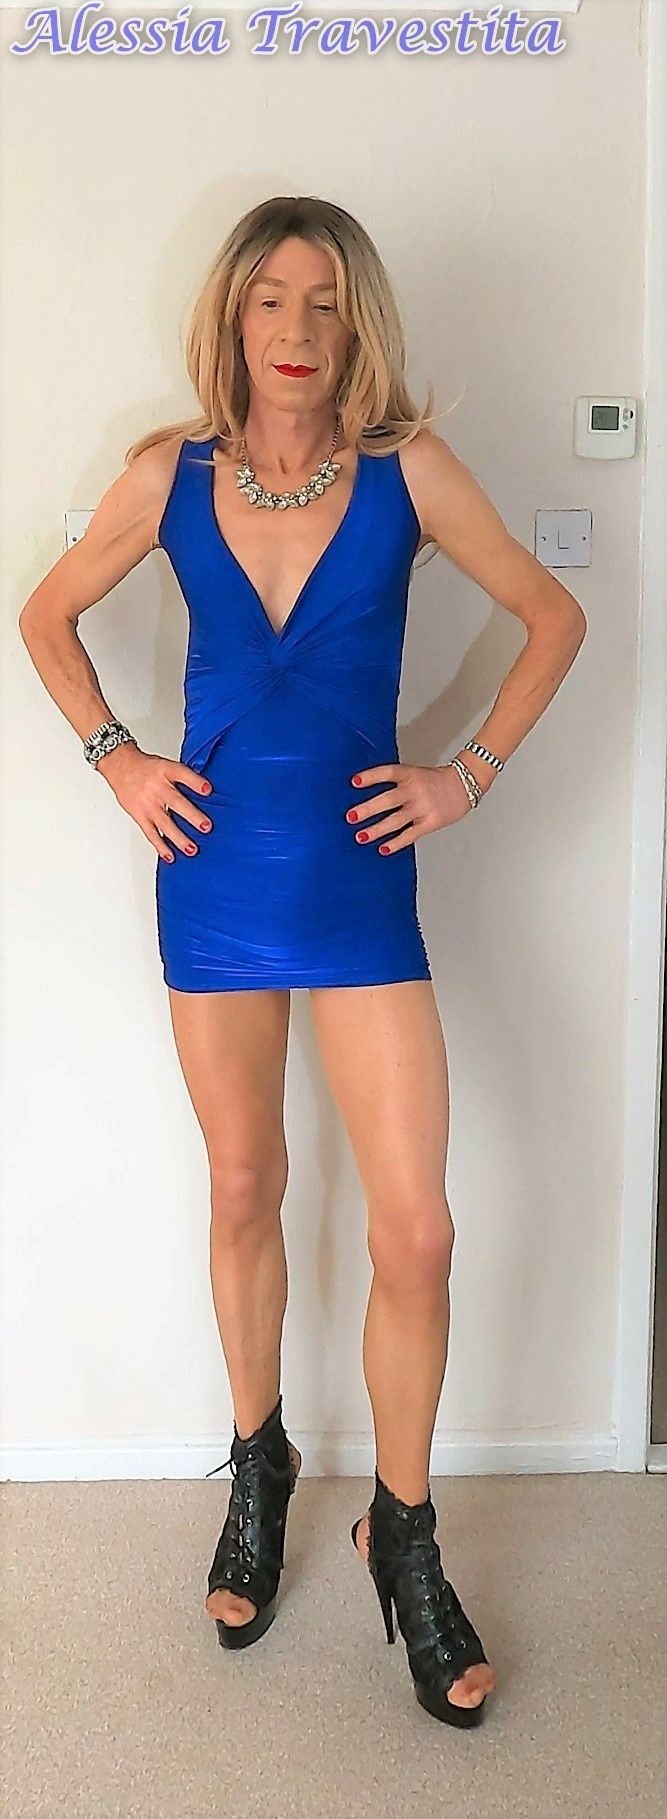 77 Alessia Travestita in Blue Italian Designer Dress #21